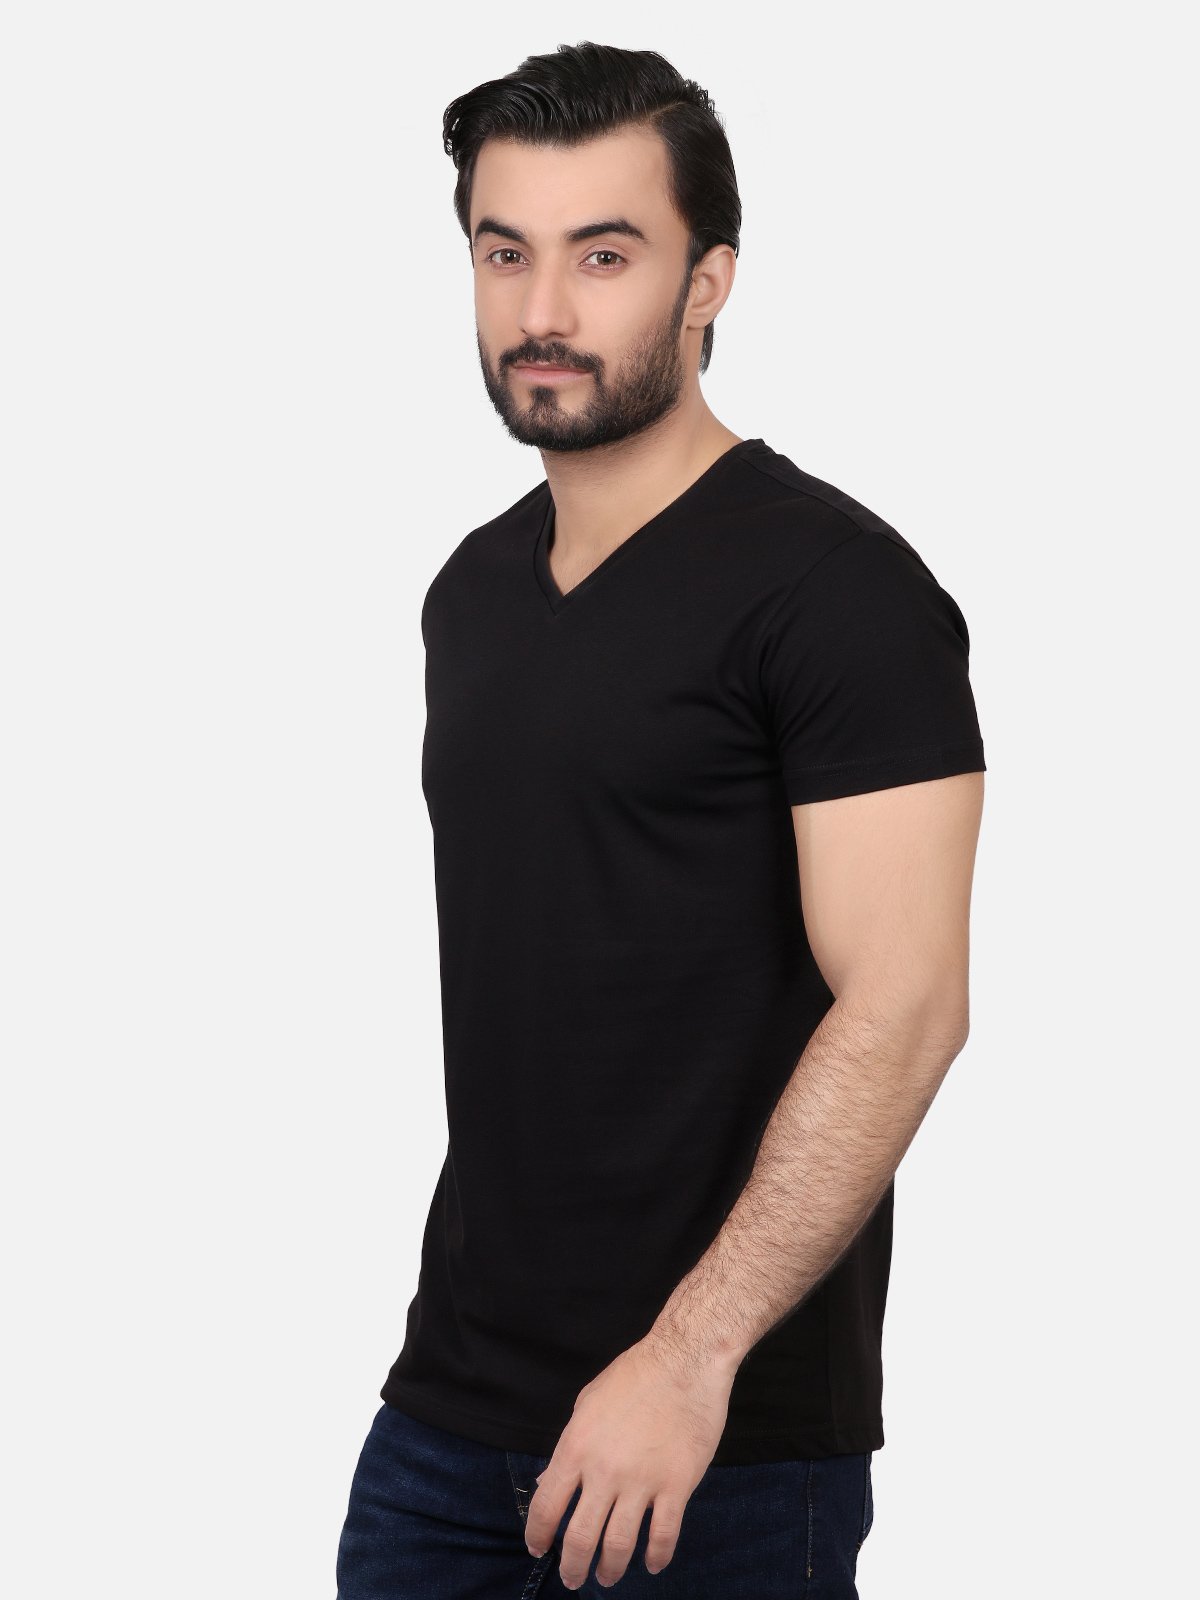 Men's Black Basic T-Shirt - FMTBT19-047